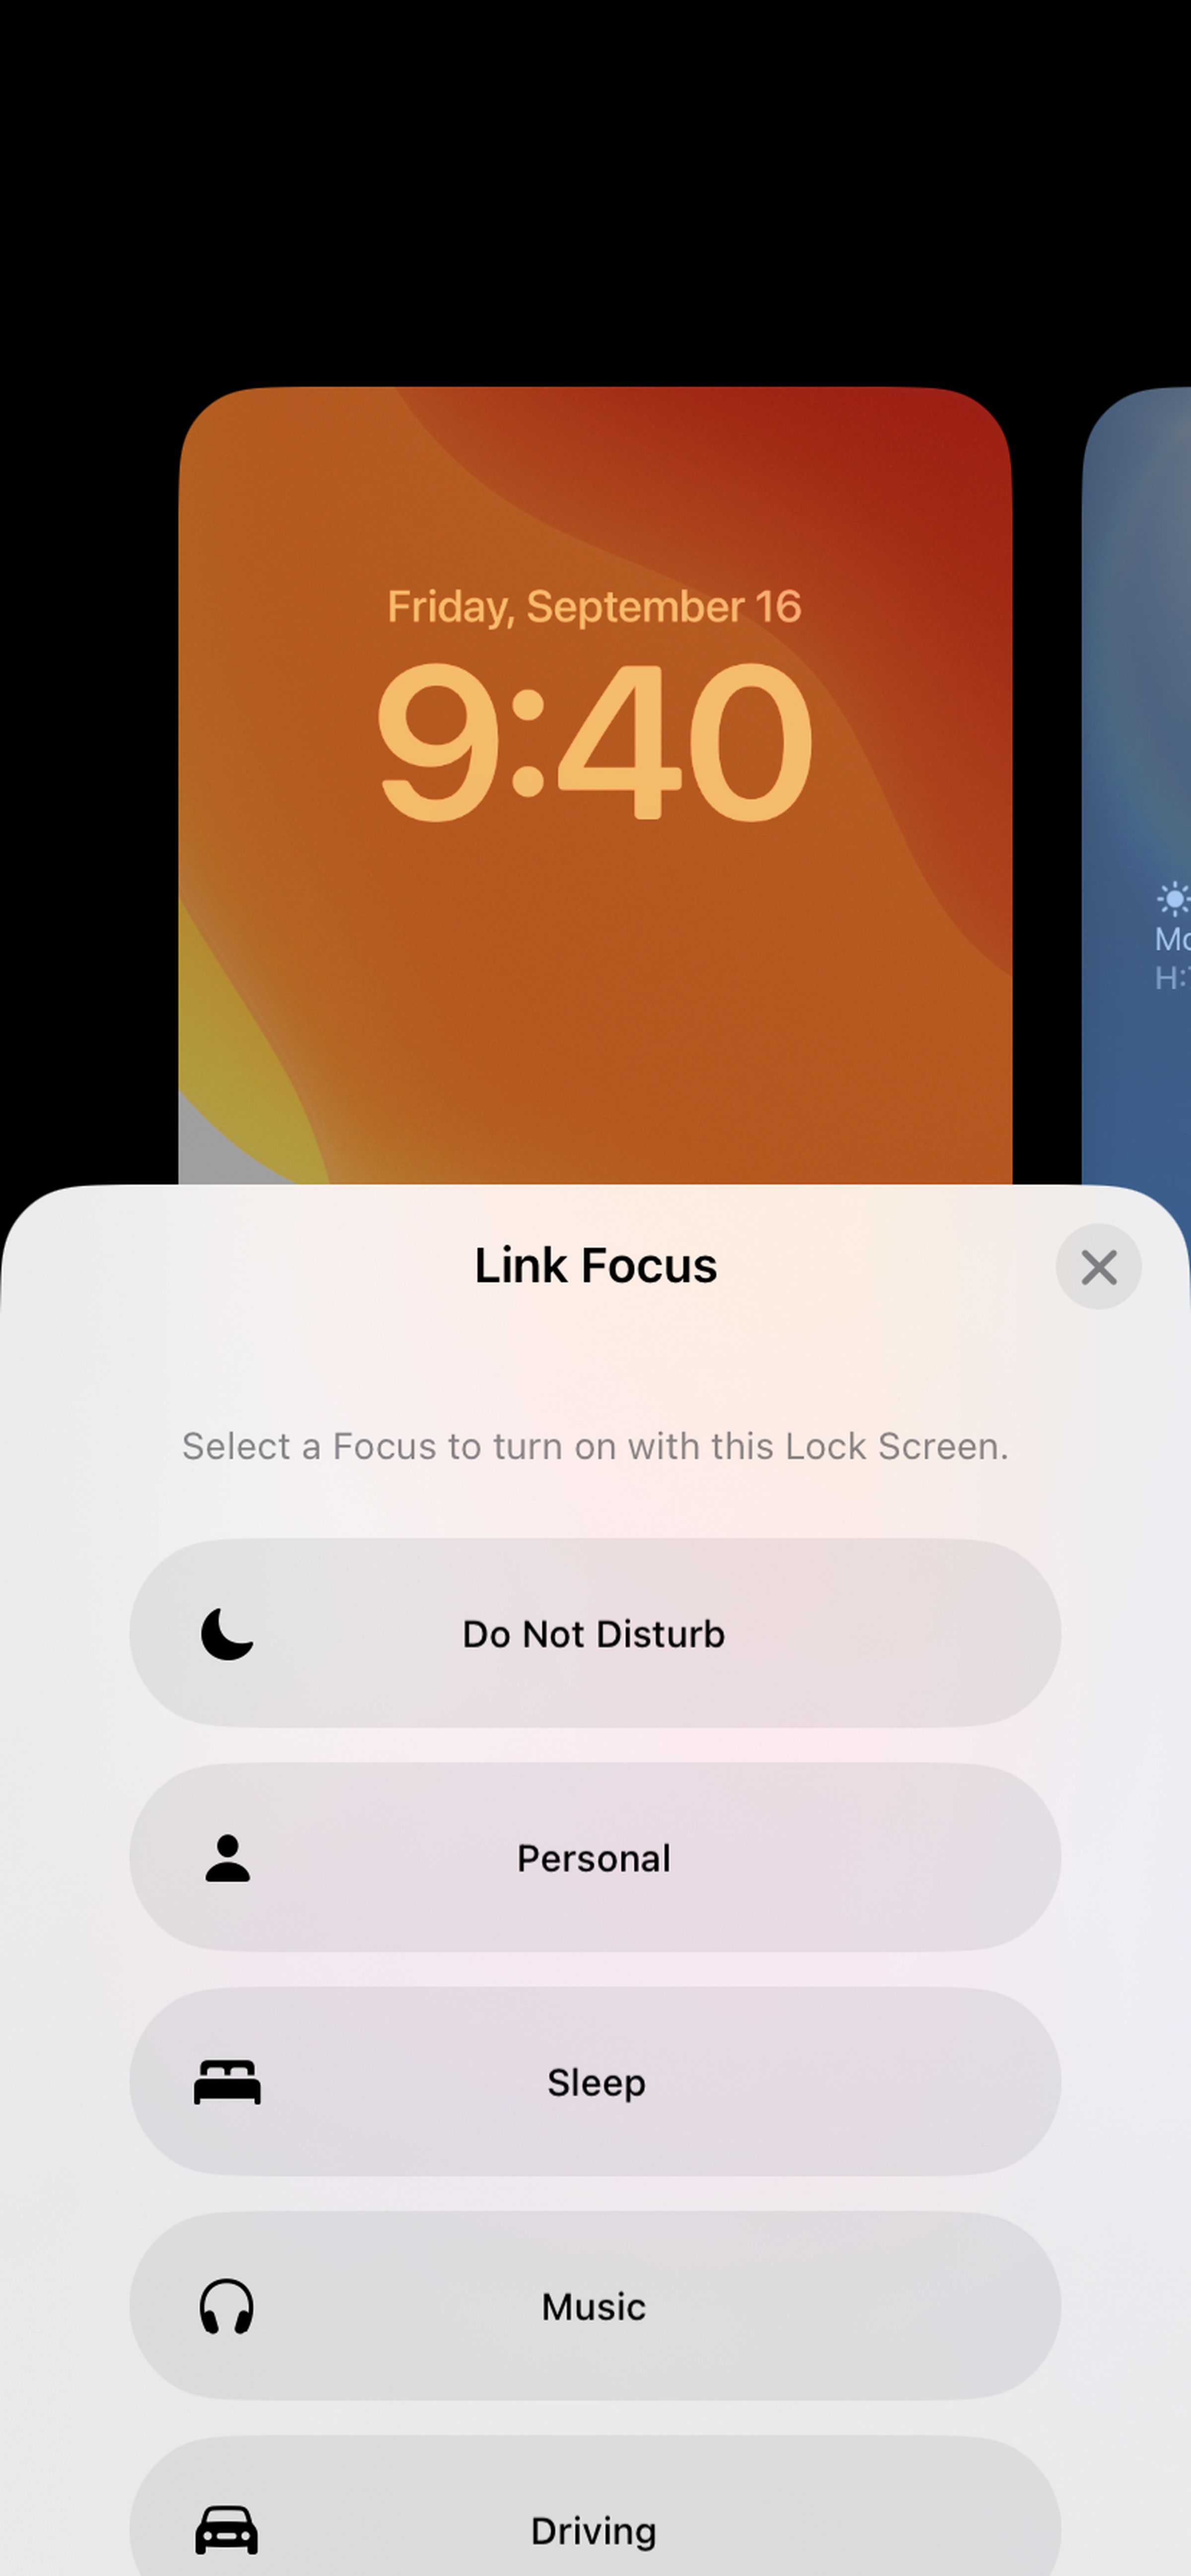 Default focus mode options for lock screen.